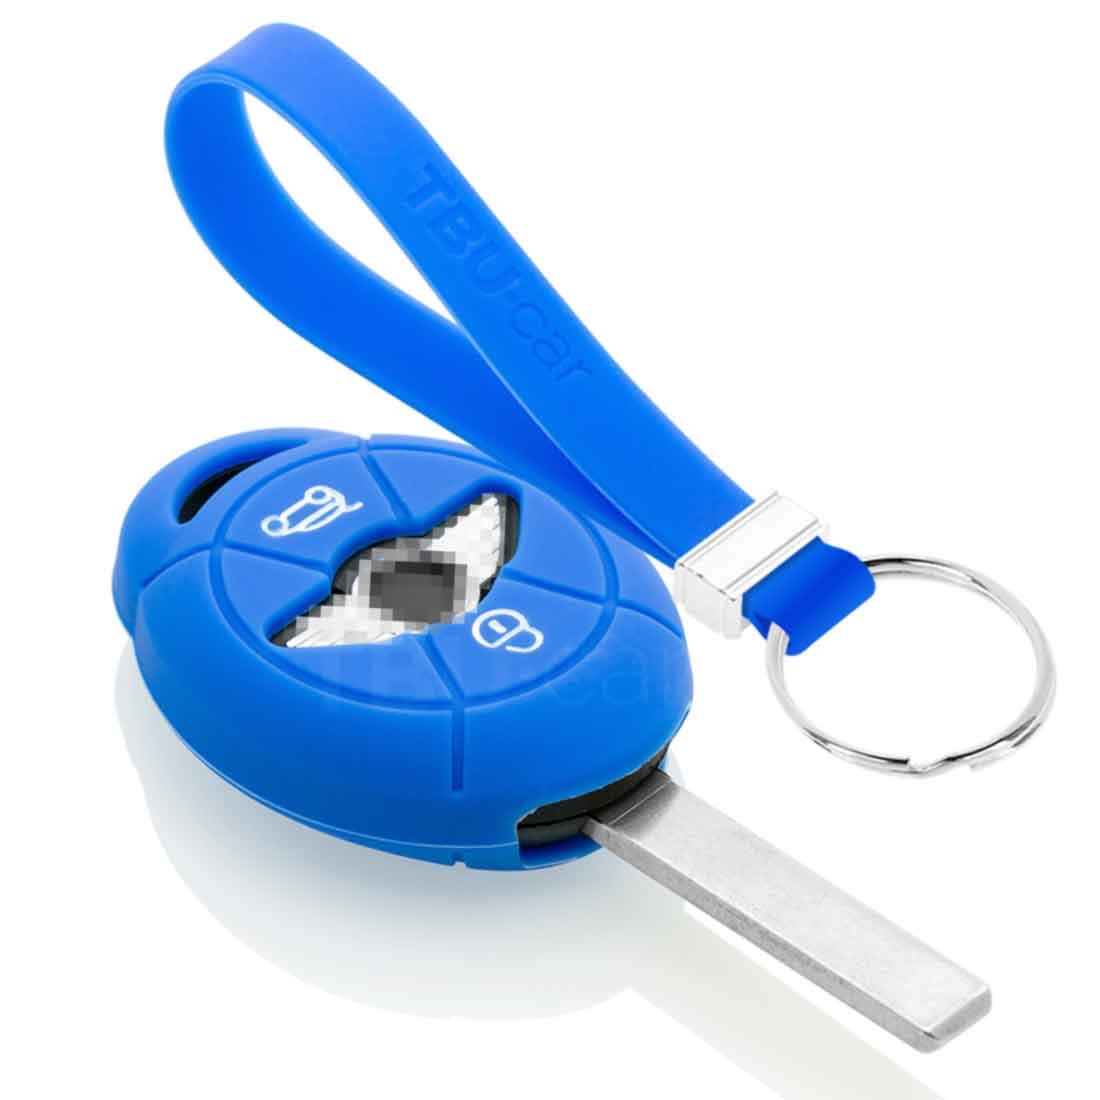 TBU car TBU car Car key cover compatible with Mini - Silicone Protective Remote Key Shell - FOB Case Cover - Blue